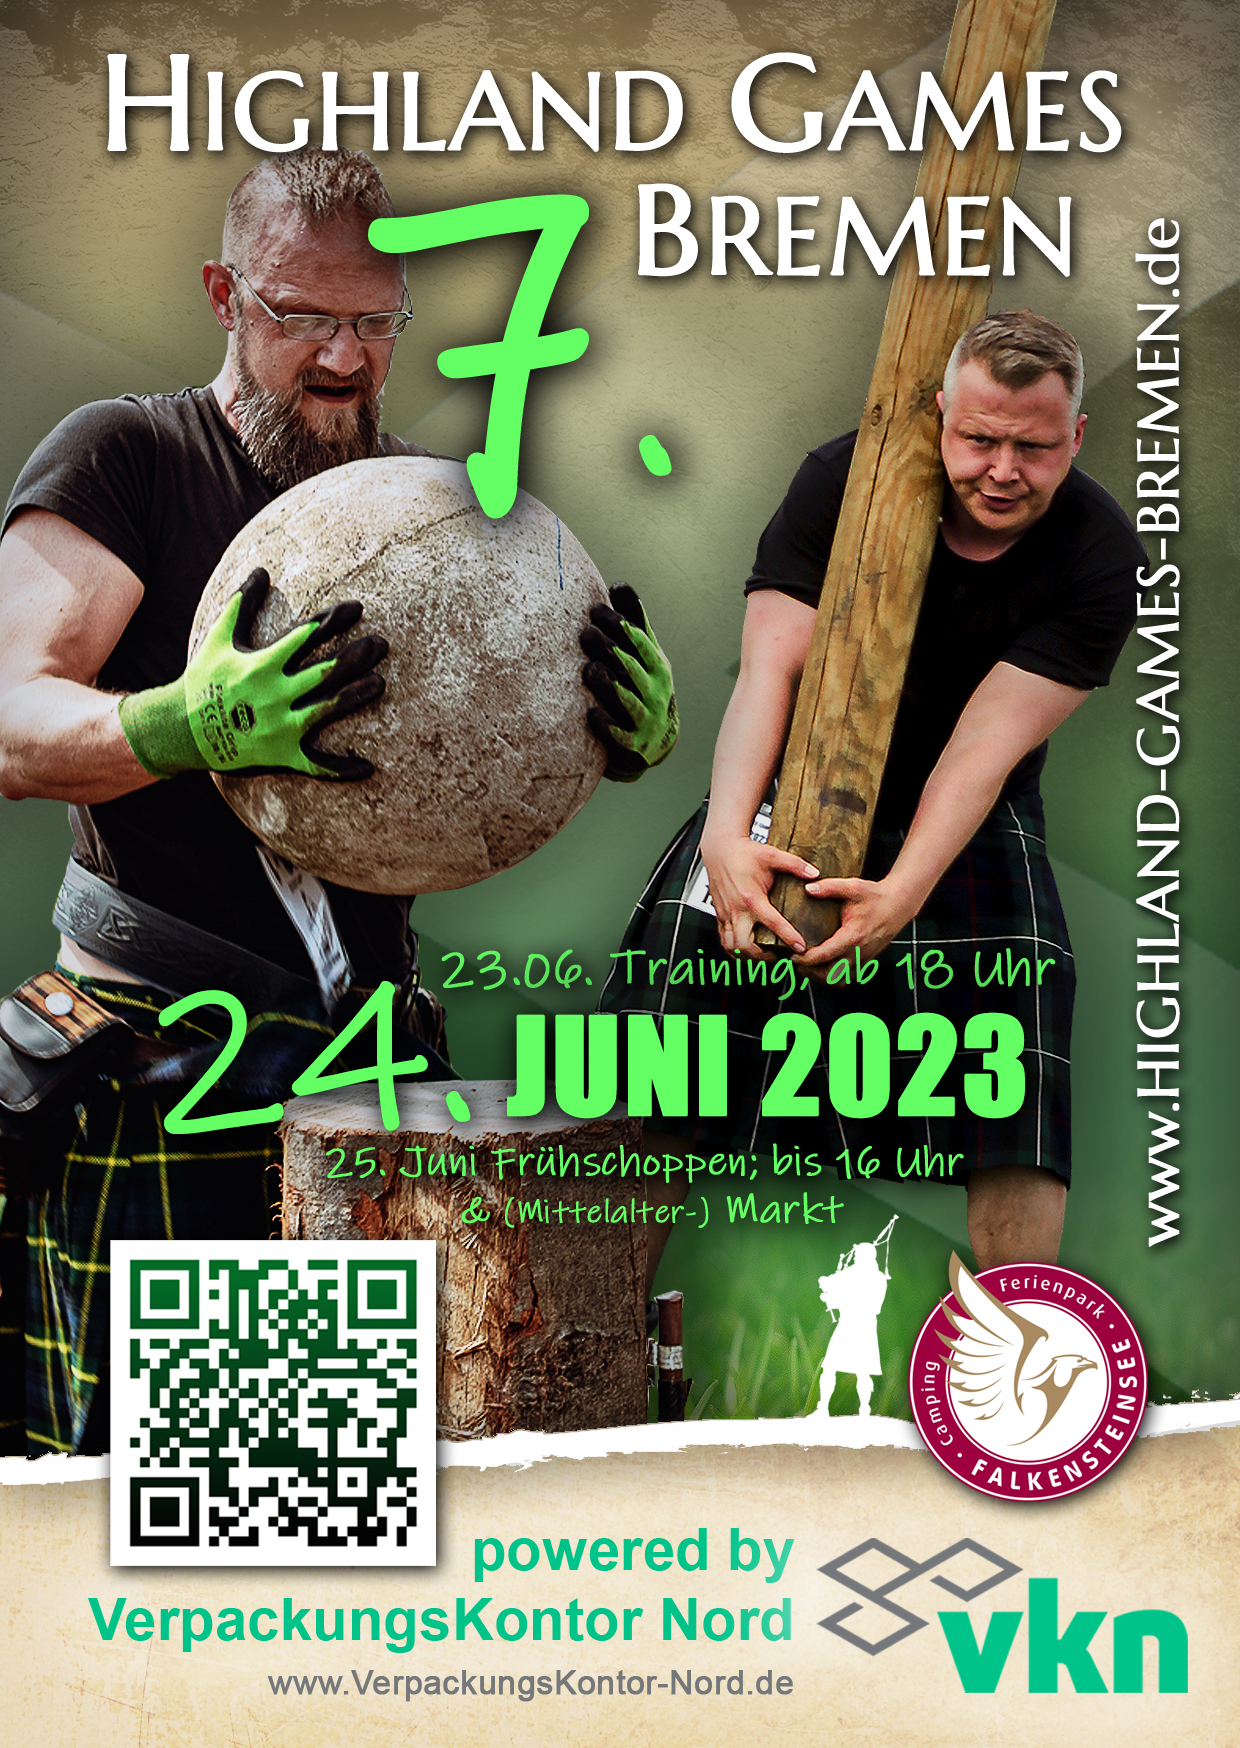 Highland Games Bremen 2022 - Flyer